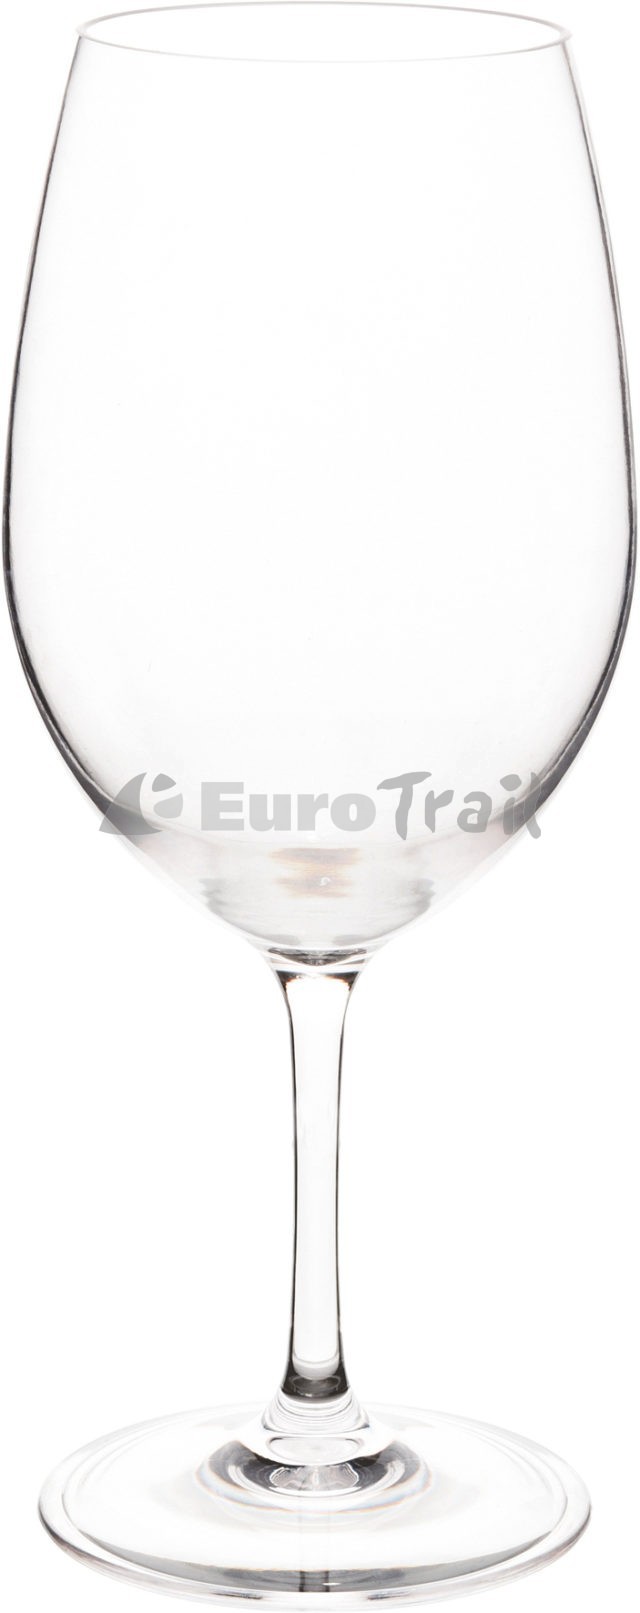 Eurotrail Weinglas Polycarbonat